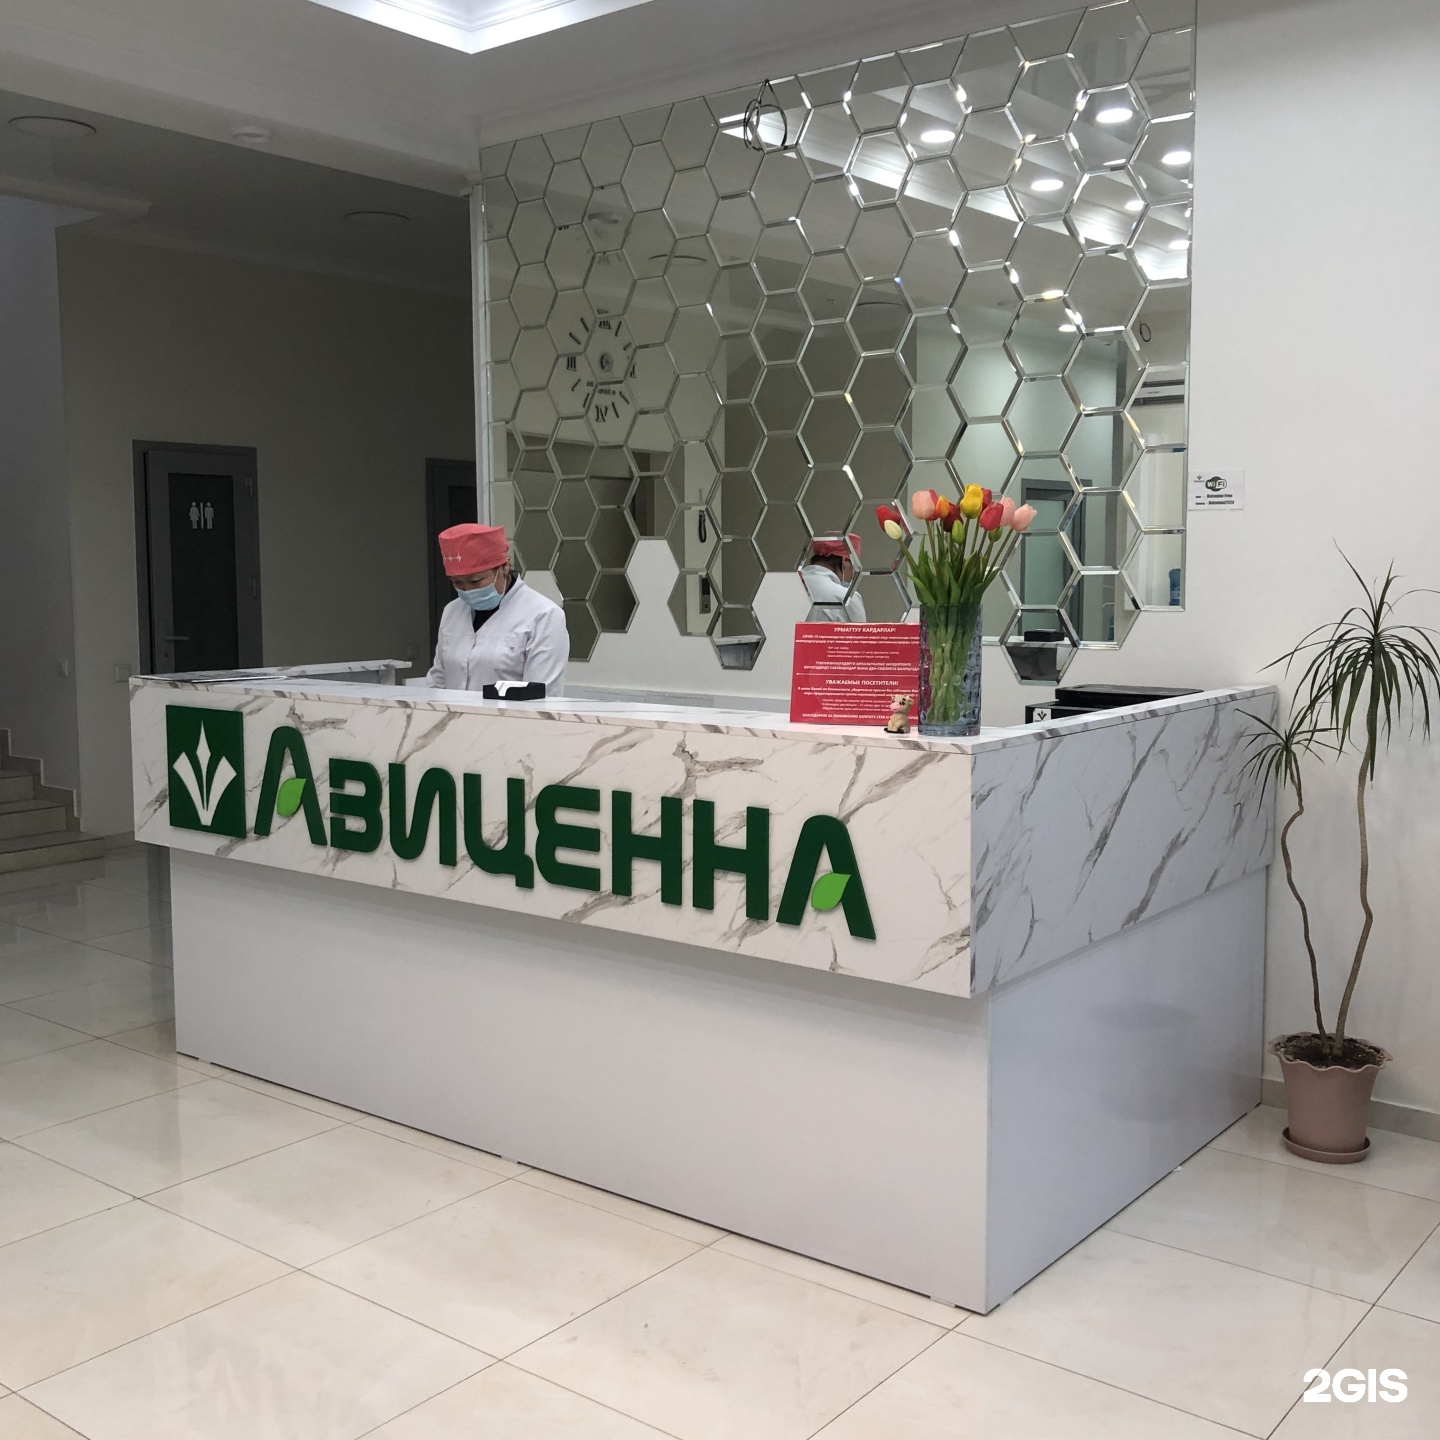 Телефон медцентра авиценна. Авиценна медицинский центр Бишкек. Бакаева 106 Авиценна. Медцентр Авиценна Кизляр. Авиценна Симферополь.